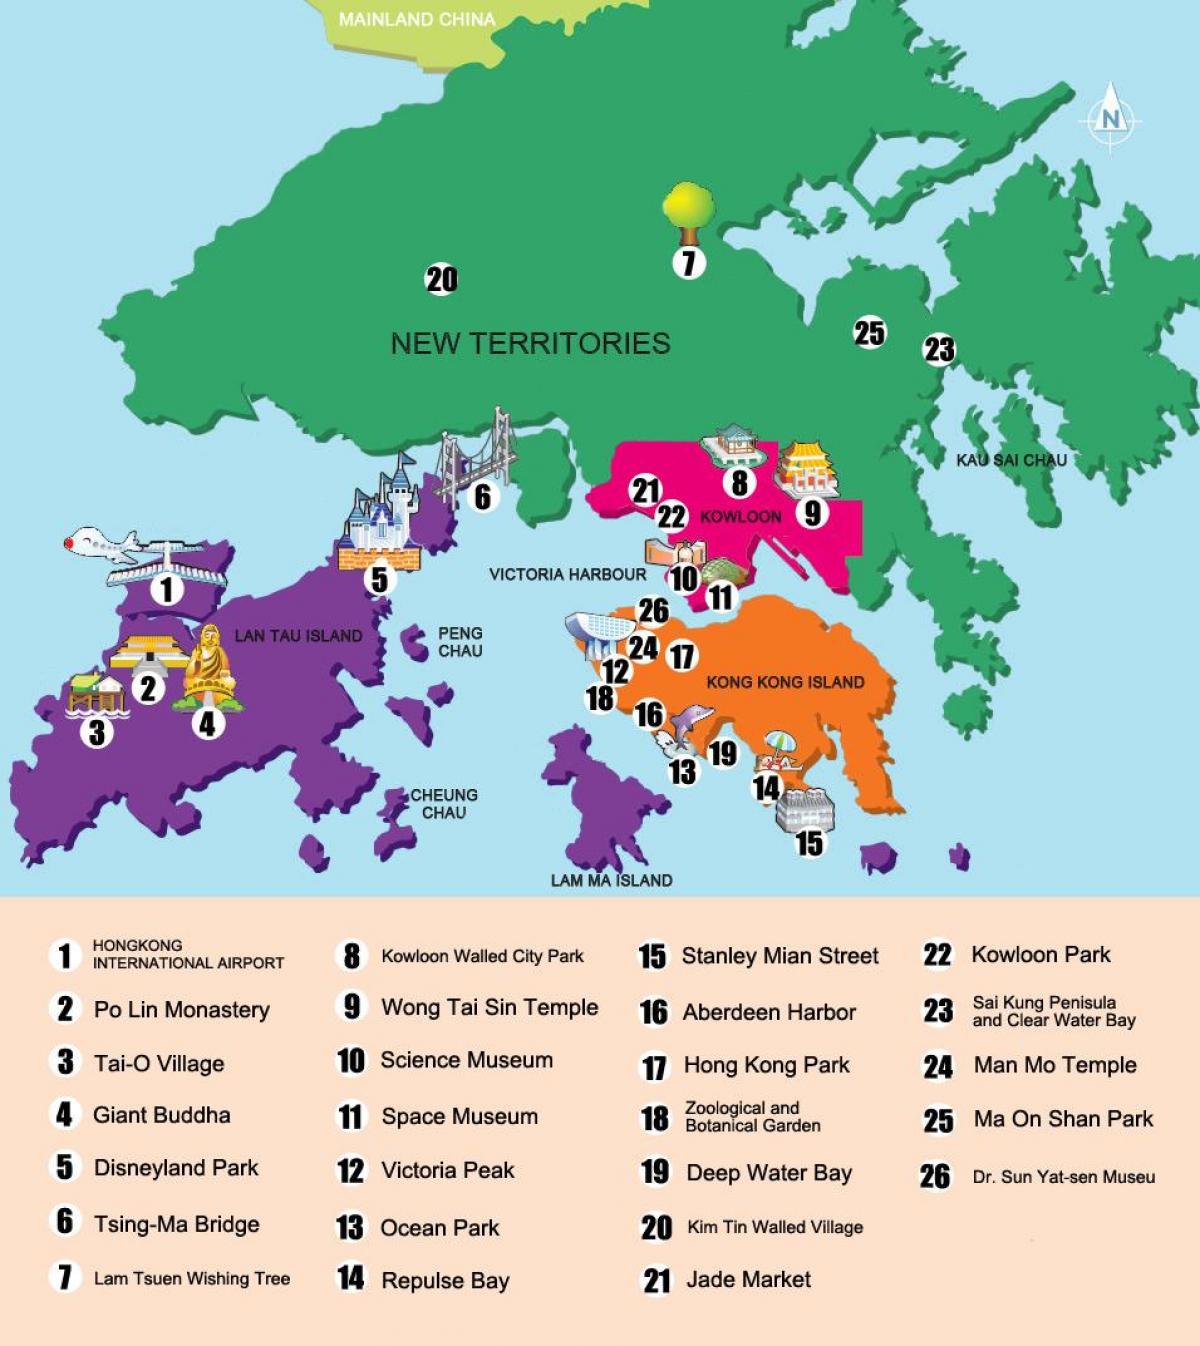 карта нови територии Хонг конг